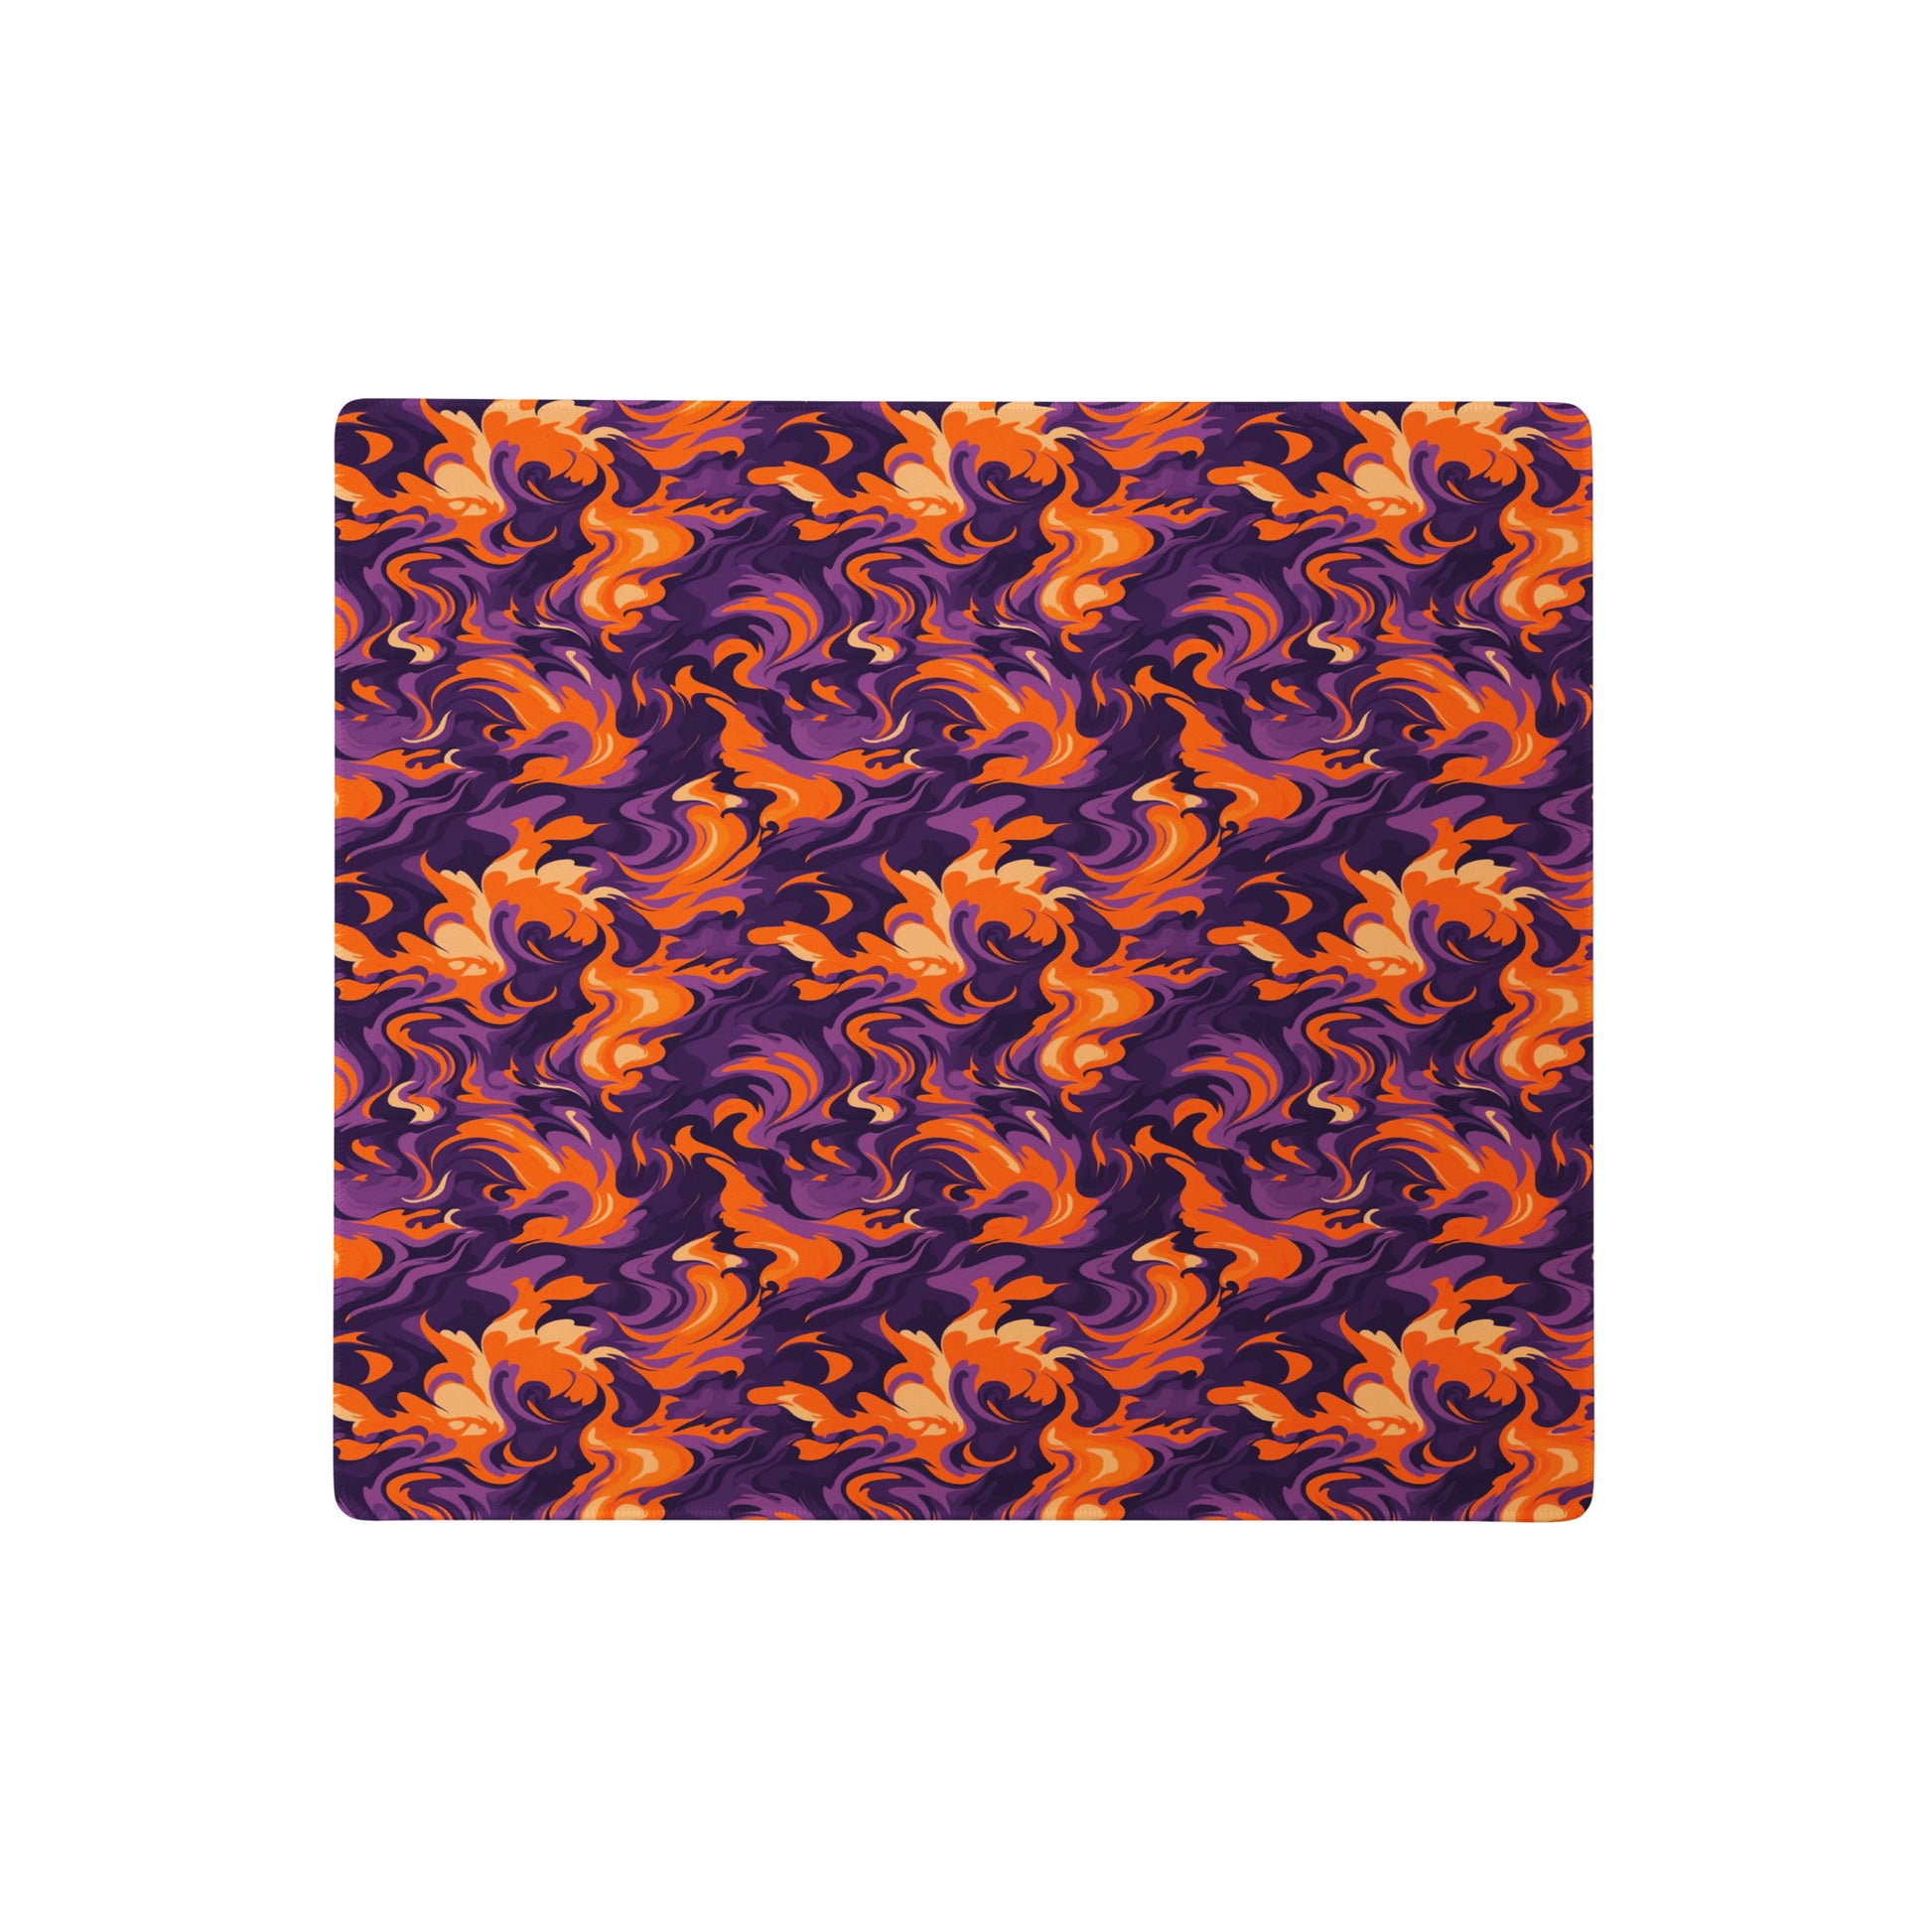 A 18" x 16" desk pad with a purple and orange camo pattern.